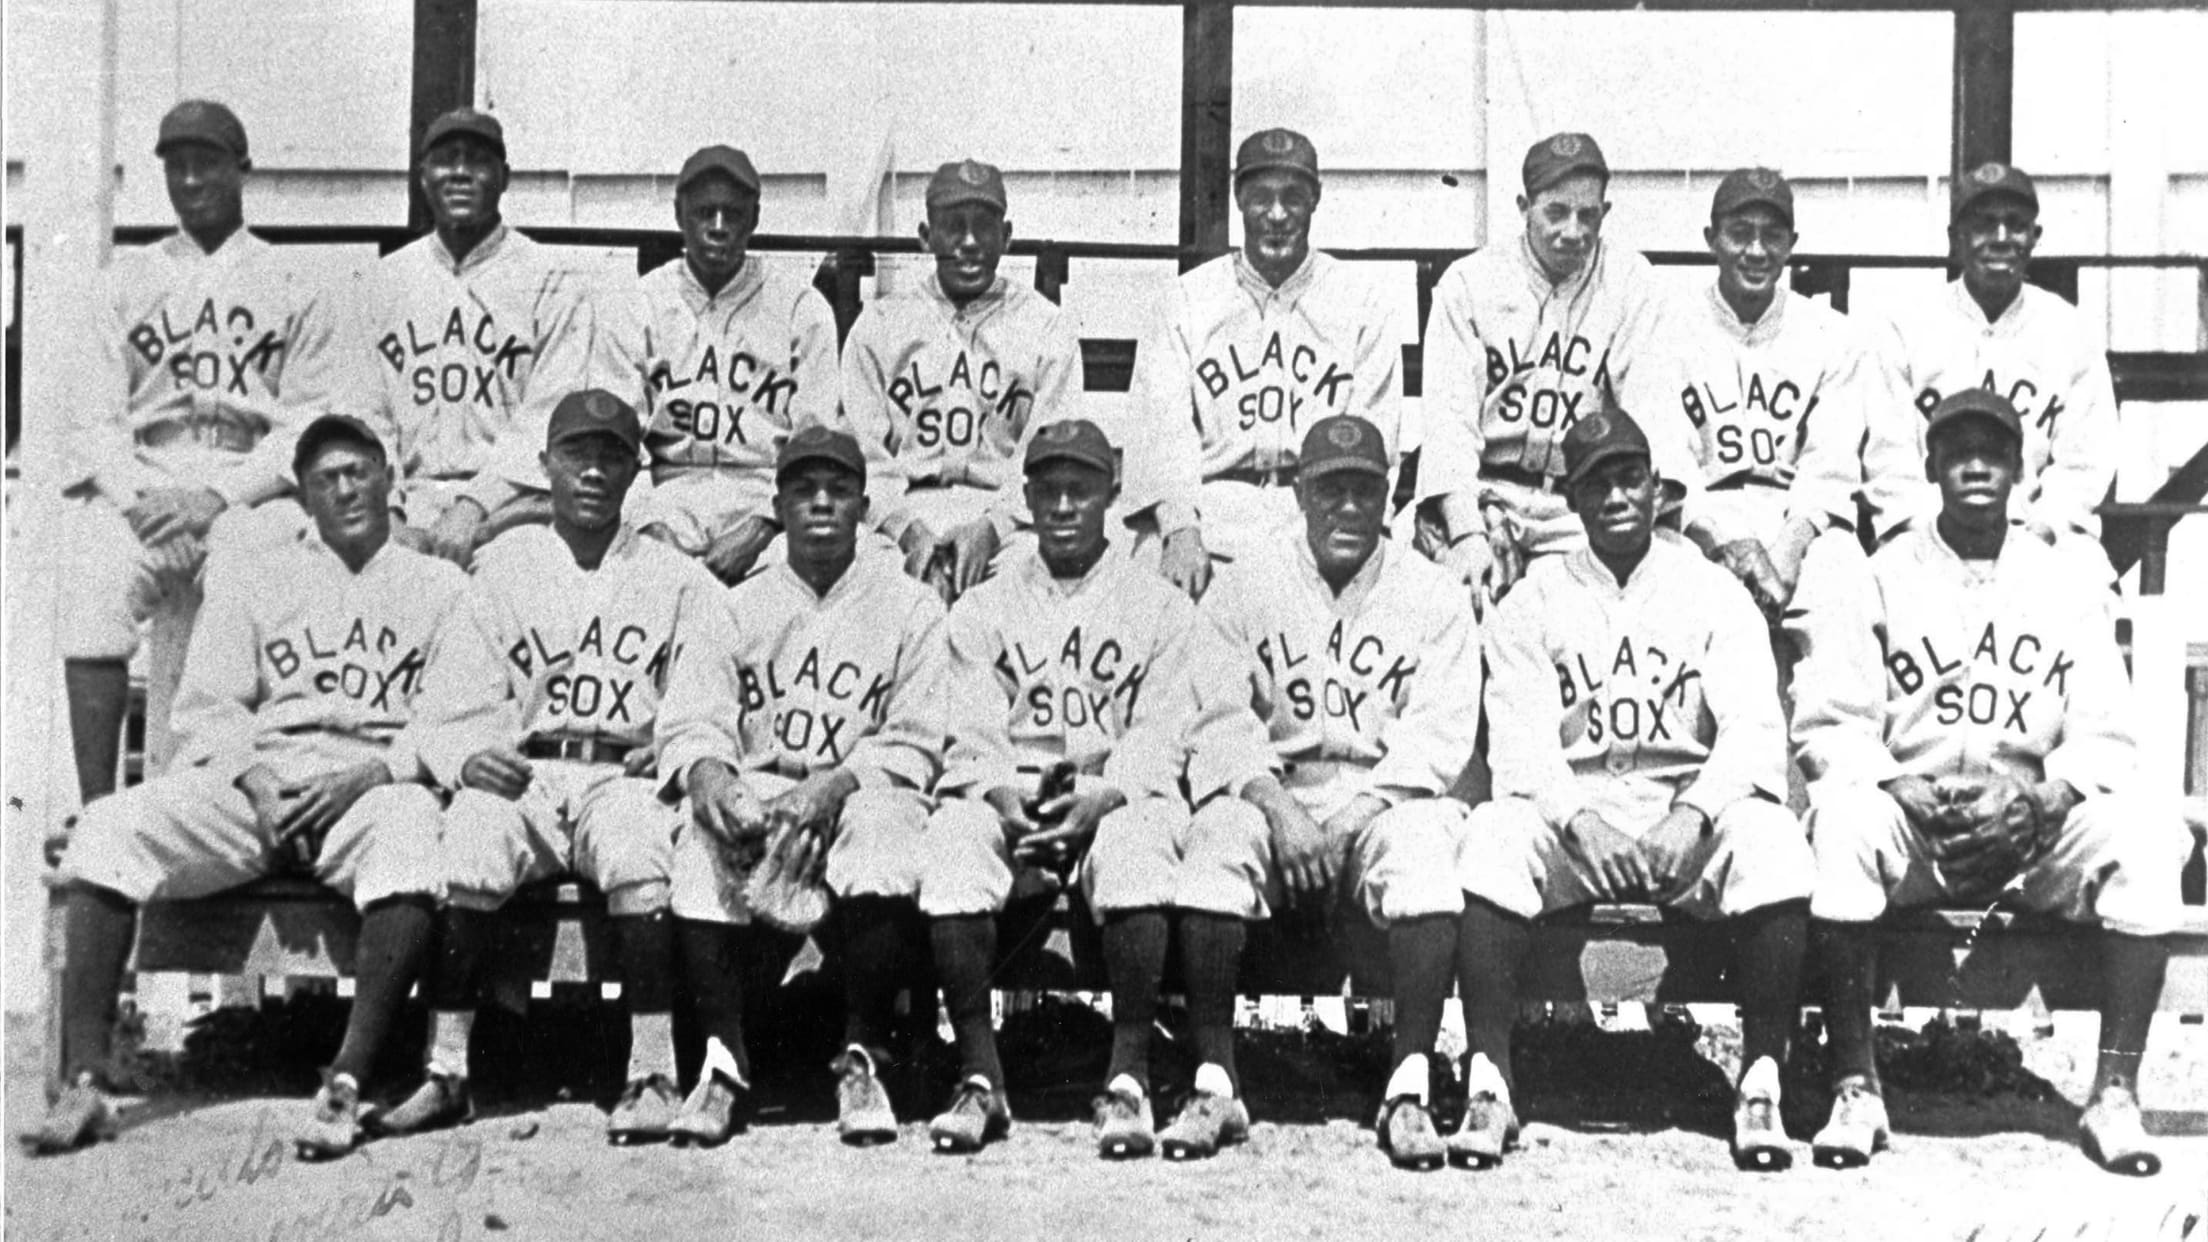 1925 BALTIMORE BLACK SOX TEAM PHOTO Negro Leagues 